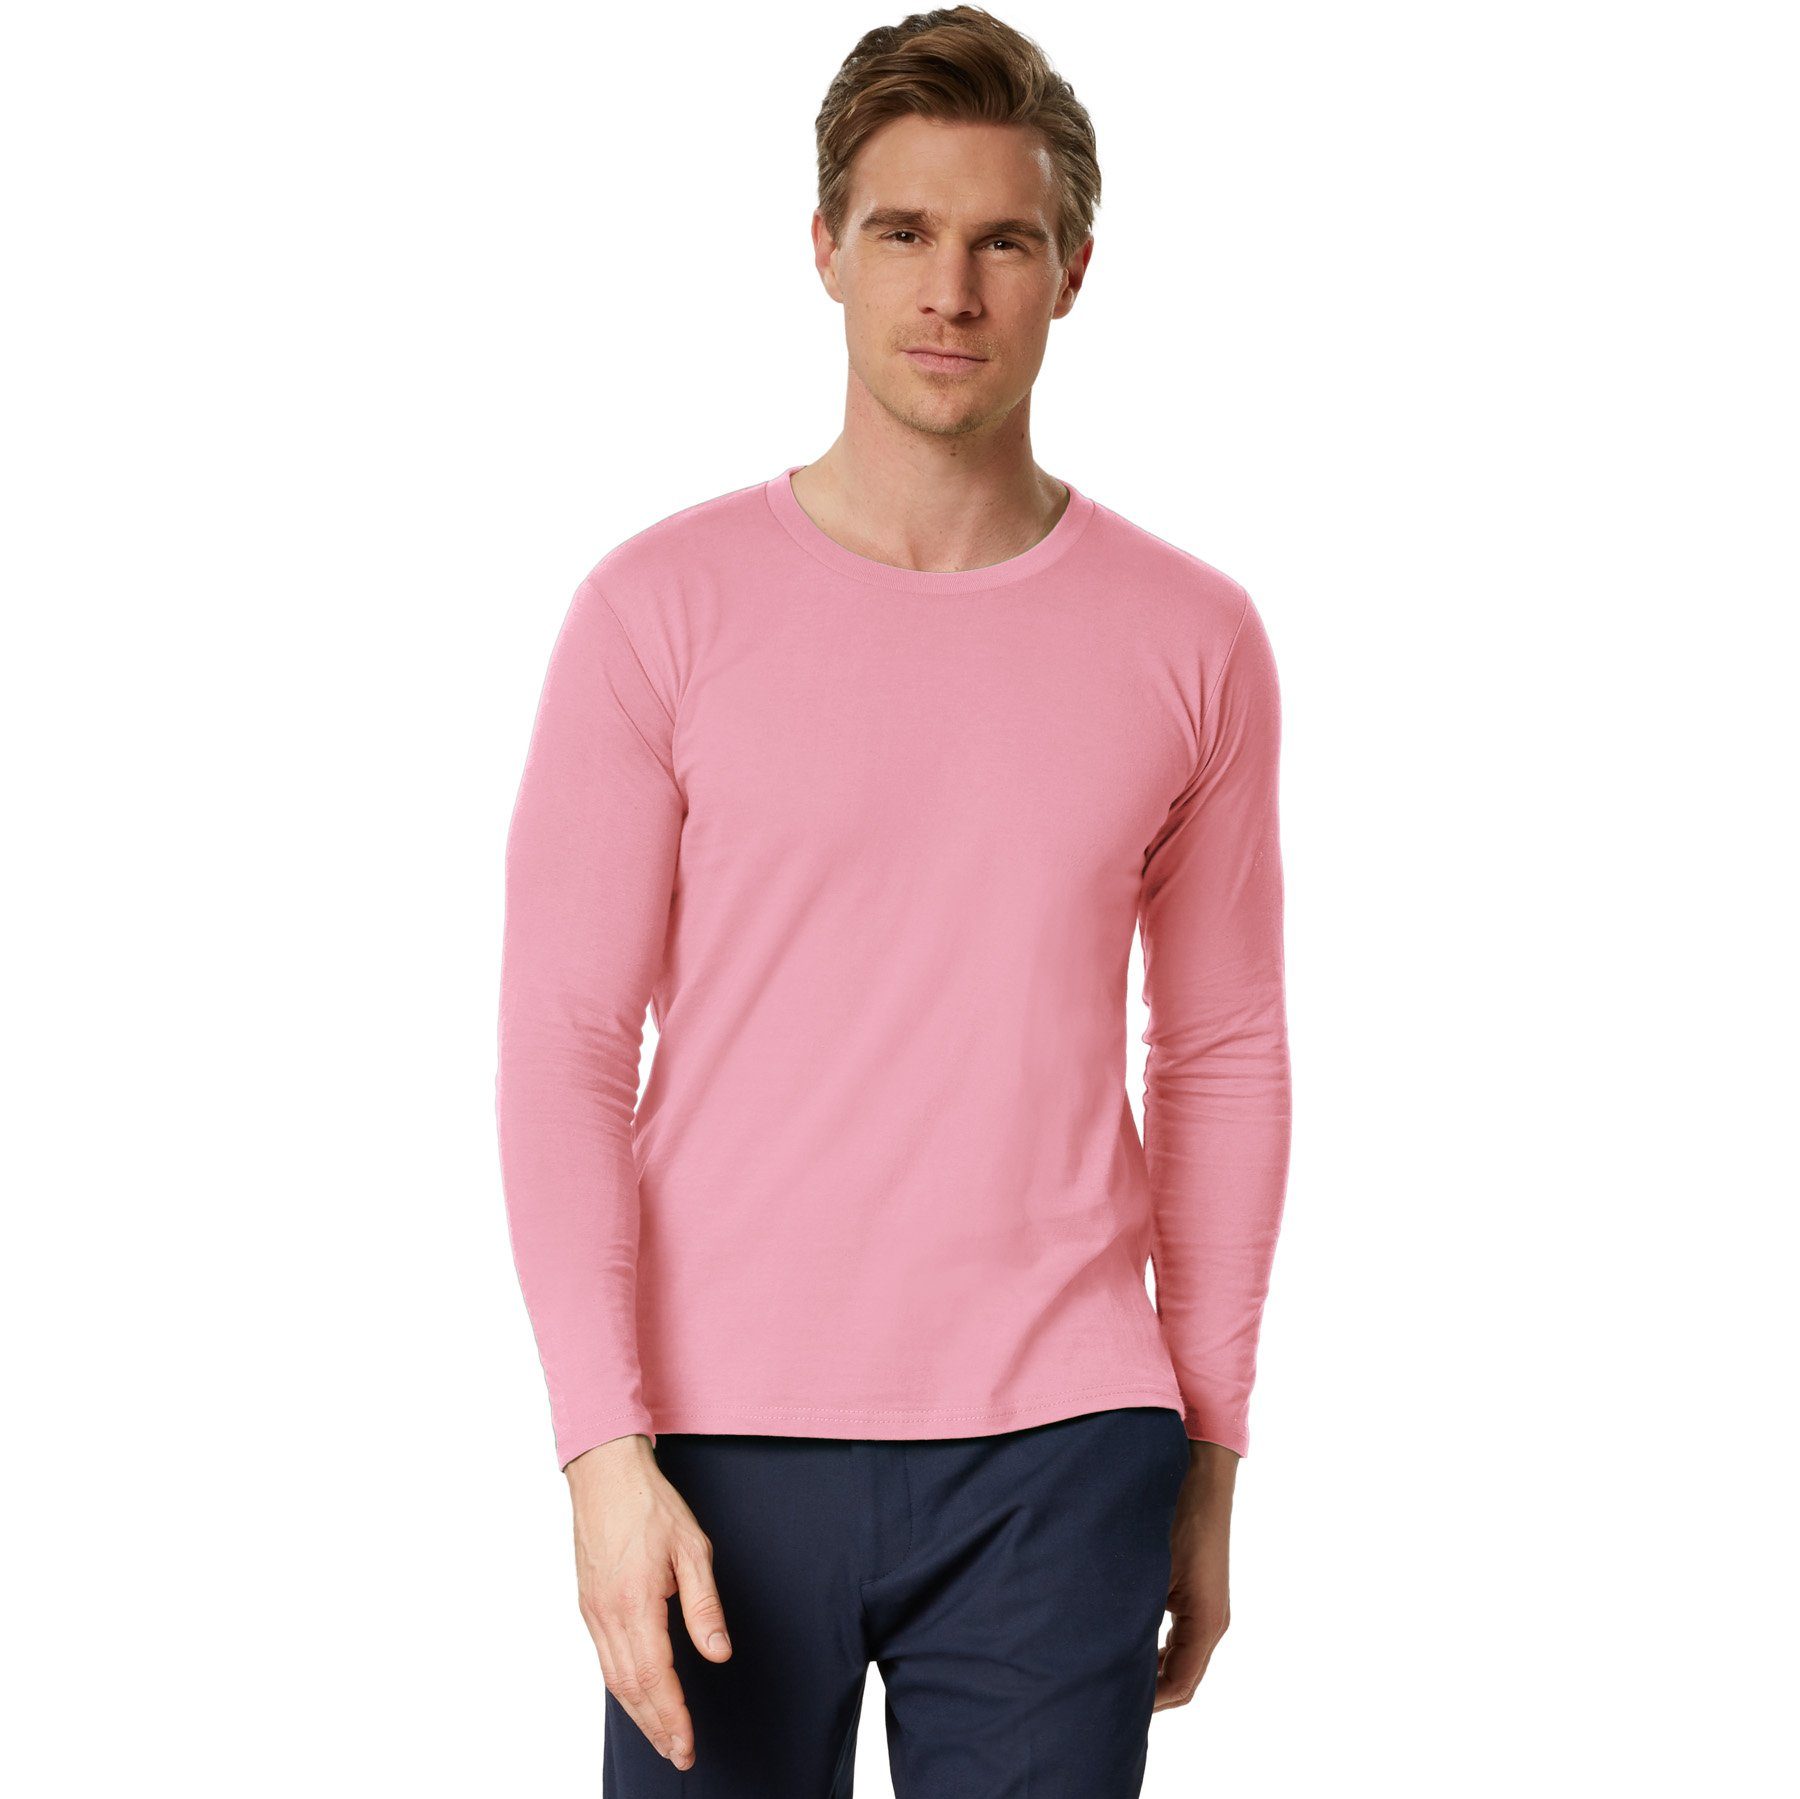 rosa Männer Langarm-Shirt dressforfun Rundhals Longsleeve